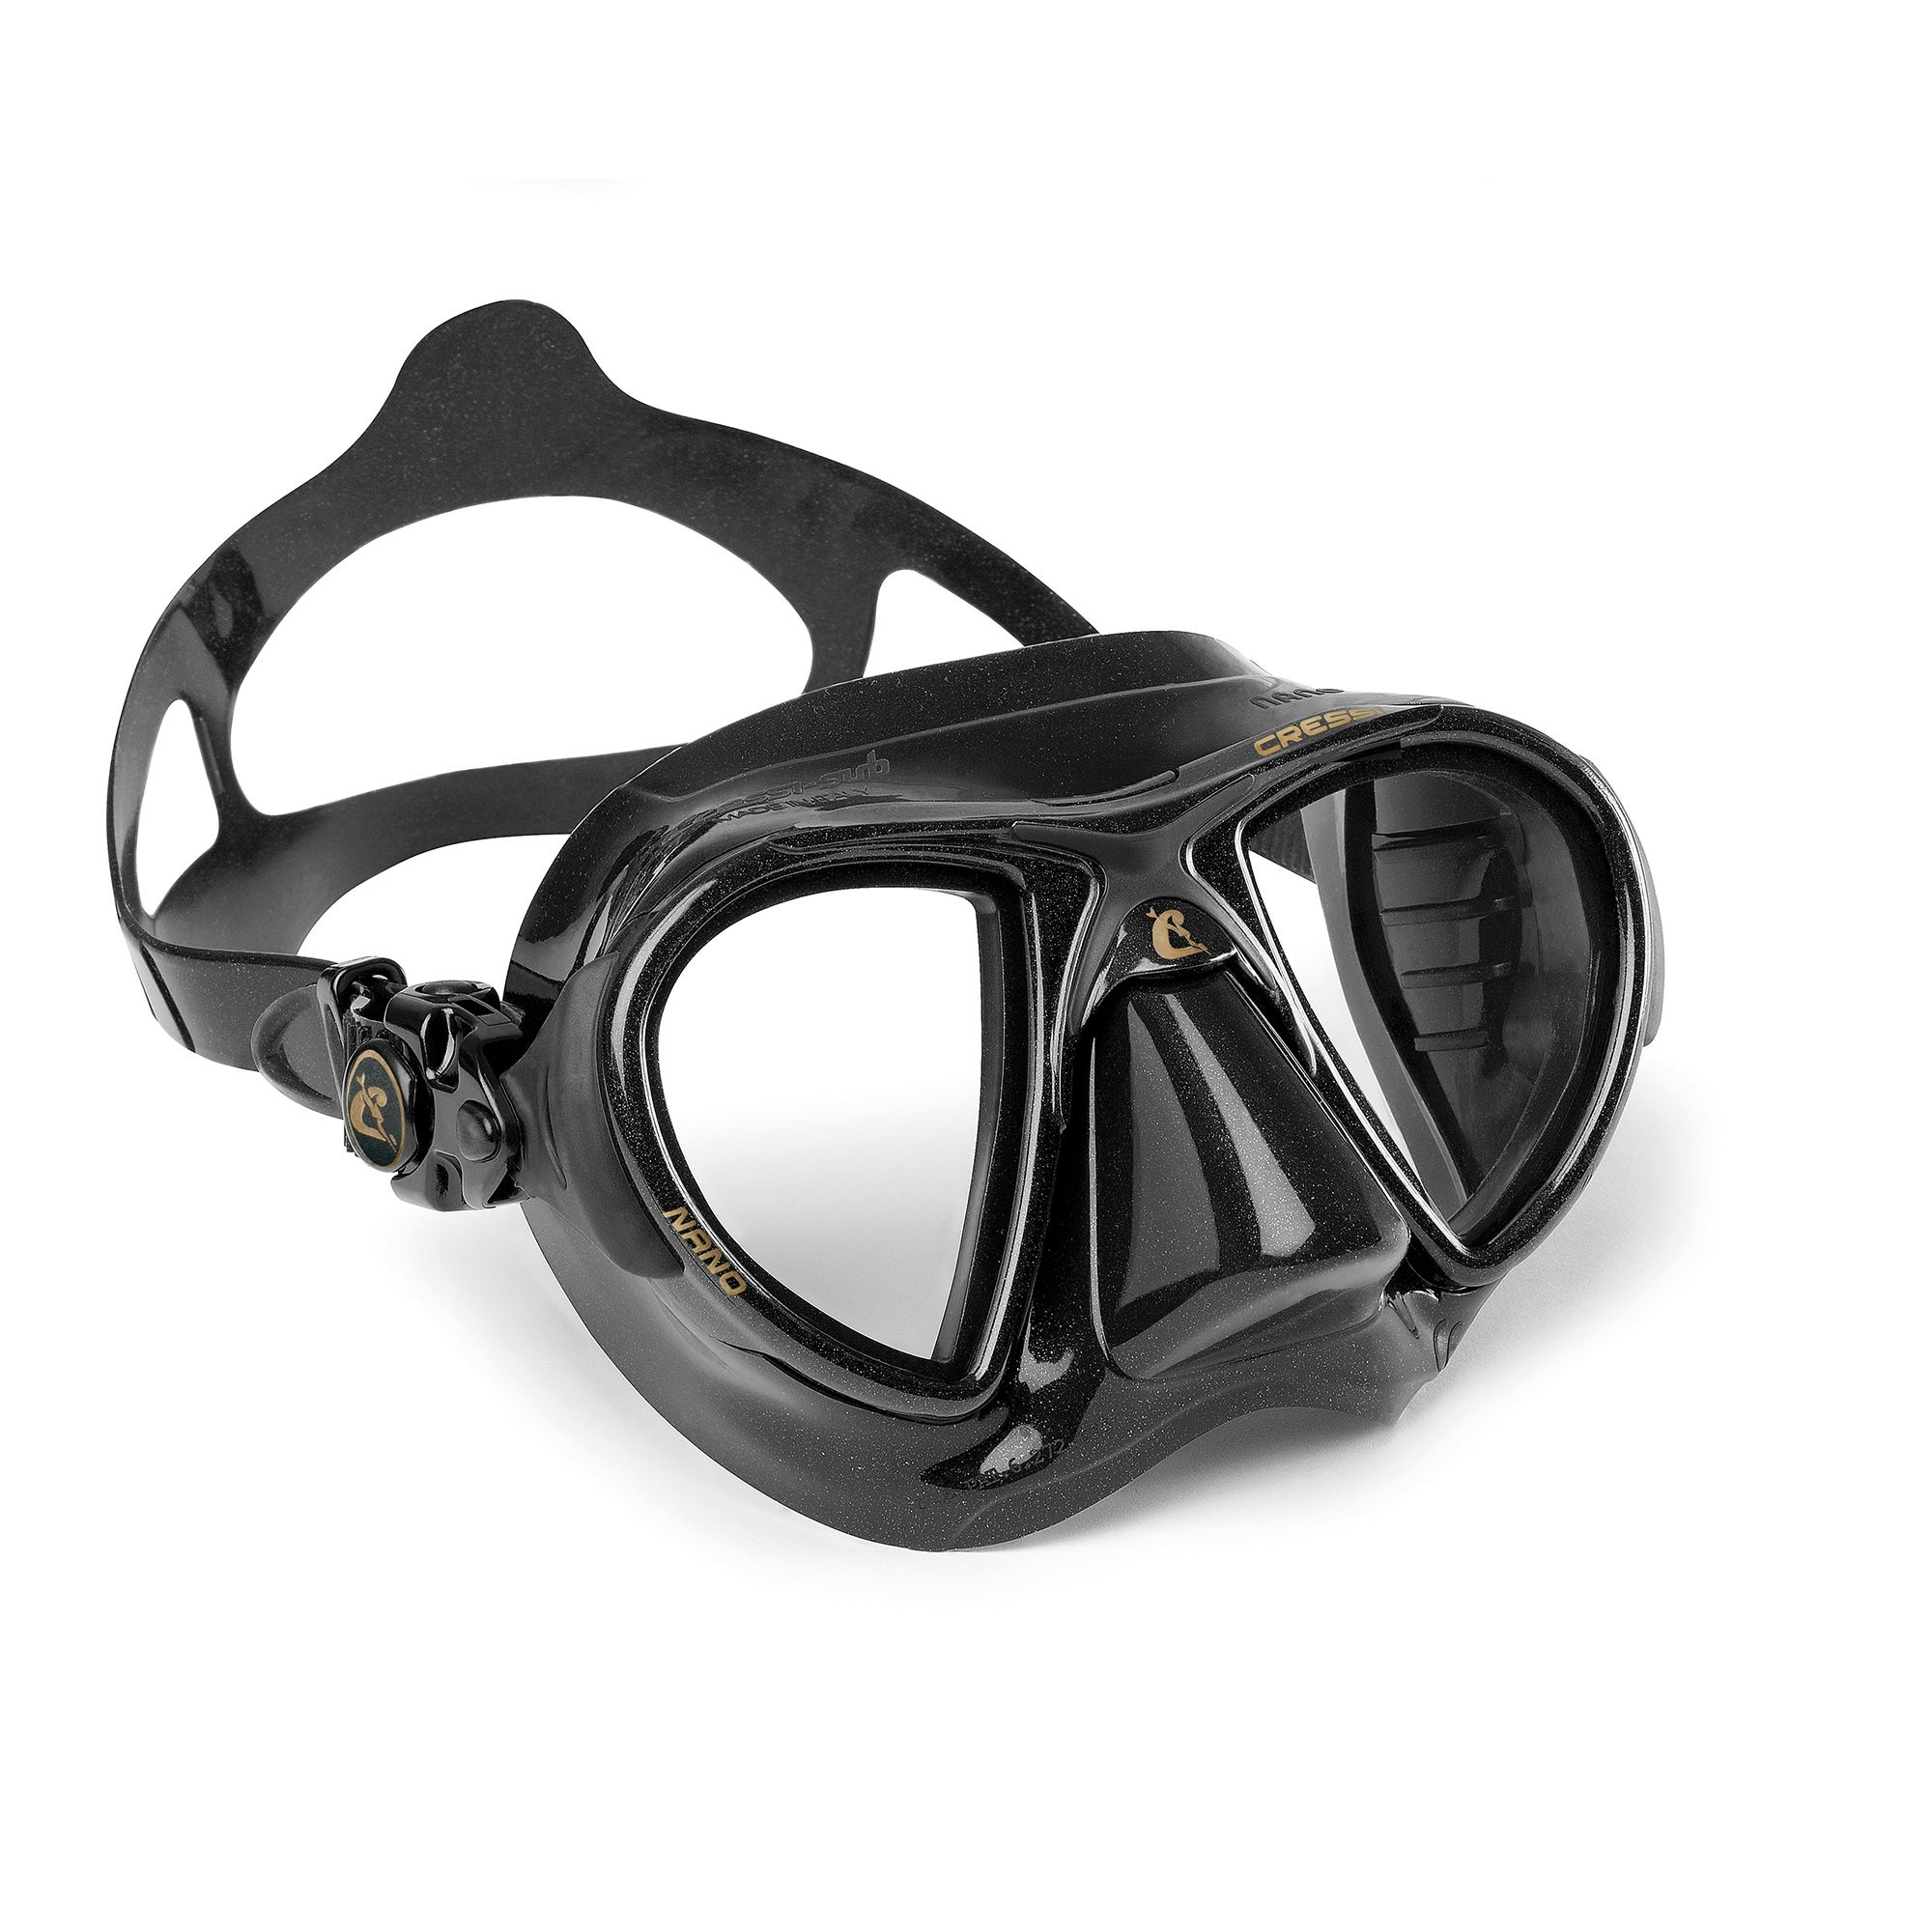 Cressi Nano Black Mask, Two Lens (Mirrored)